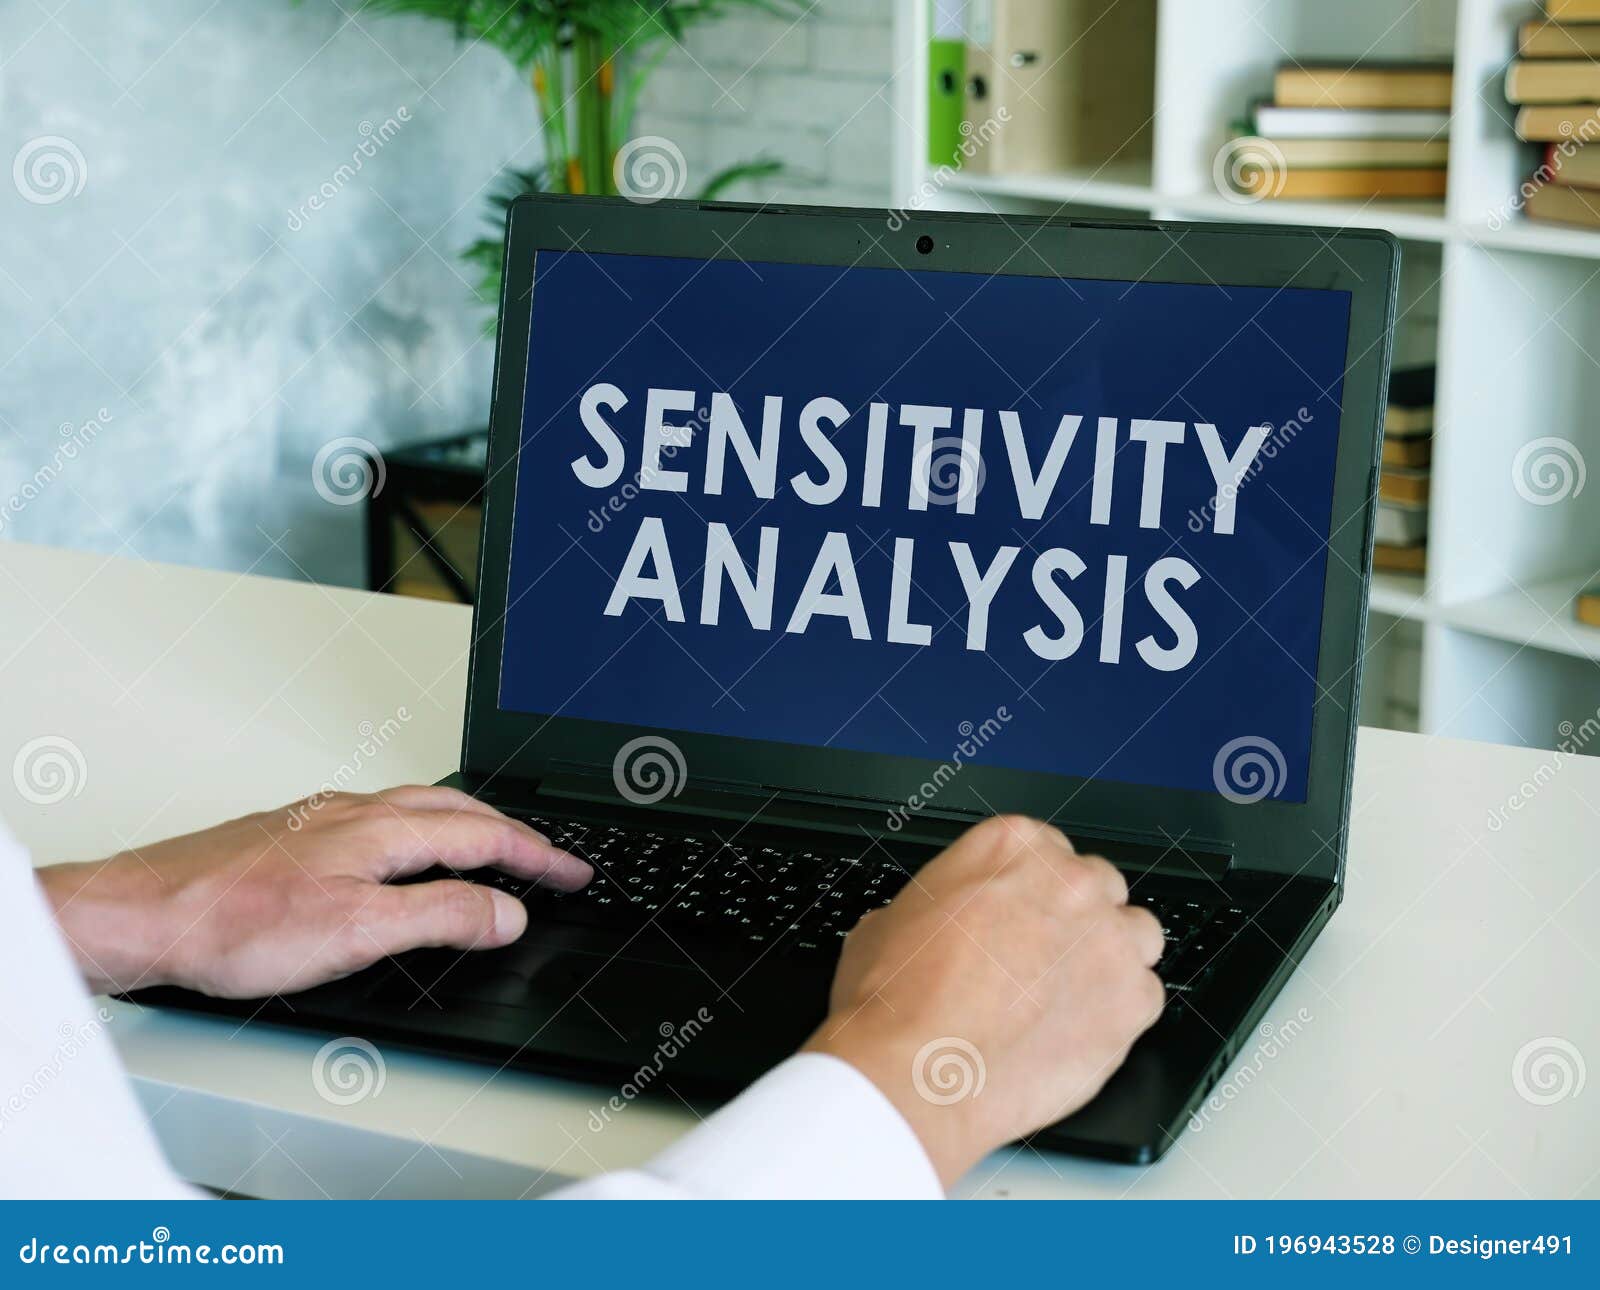 sensitivity analysis report on screen of laptop.